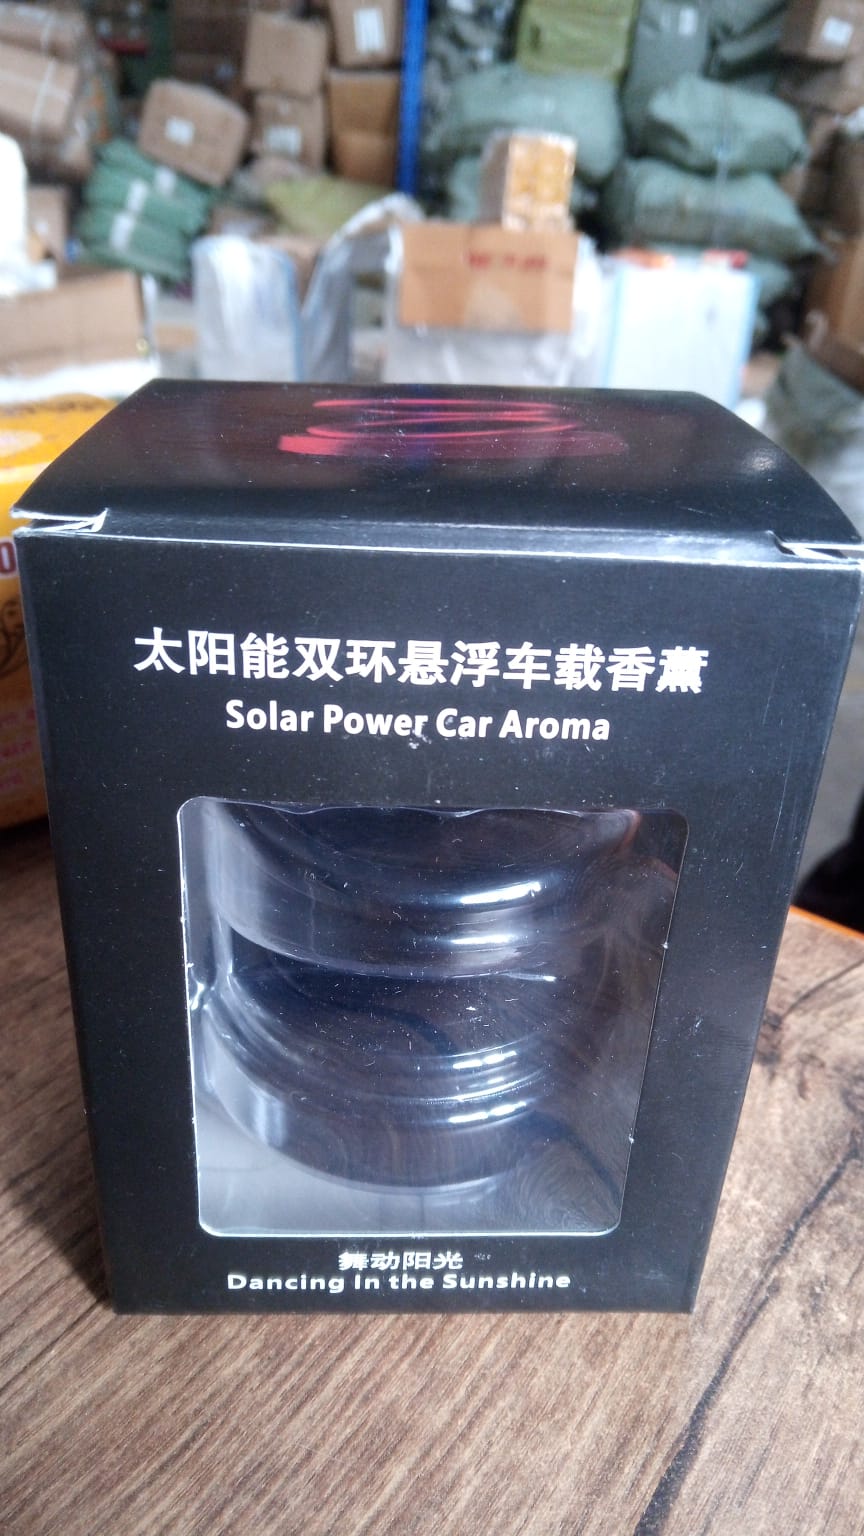 6319 Solar Power Car Aroma Diffuser 360°Double Ring Rotating Design, Car Fragrance Diffuser, Car Perfume Air Freshener for Dashboard Home Office